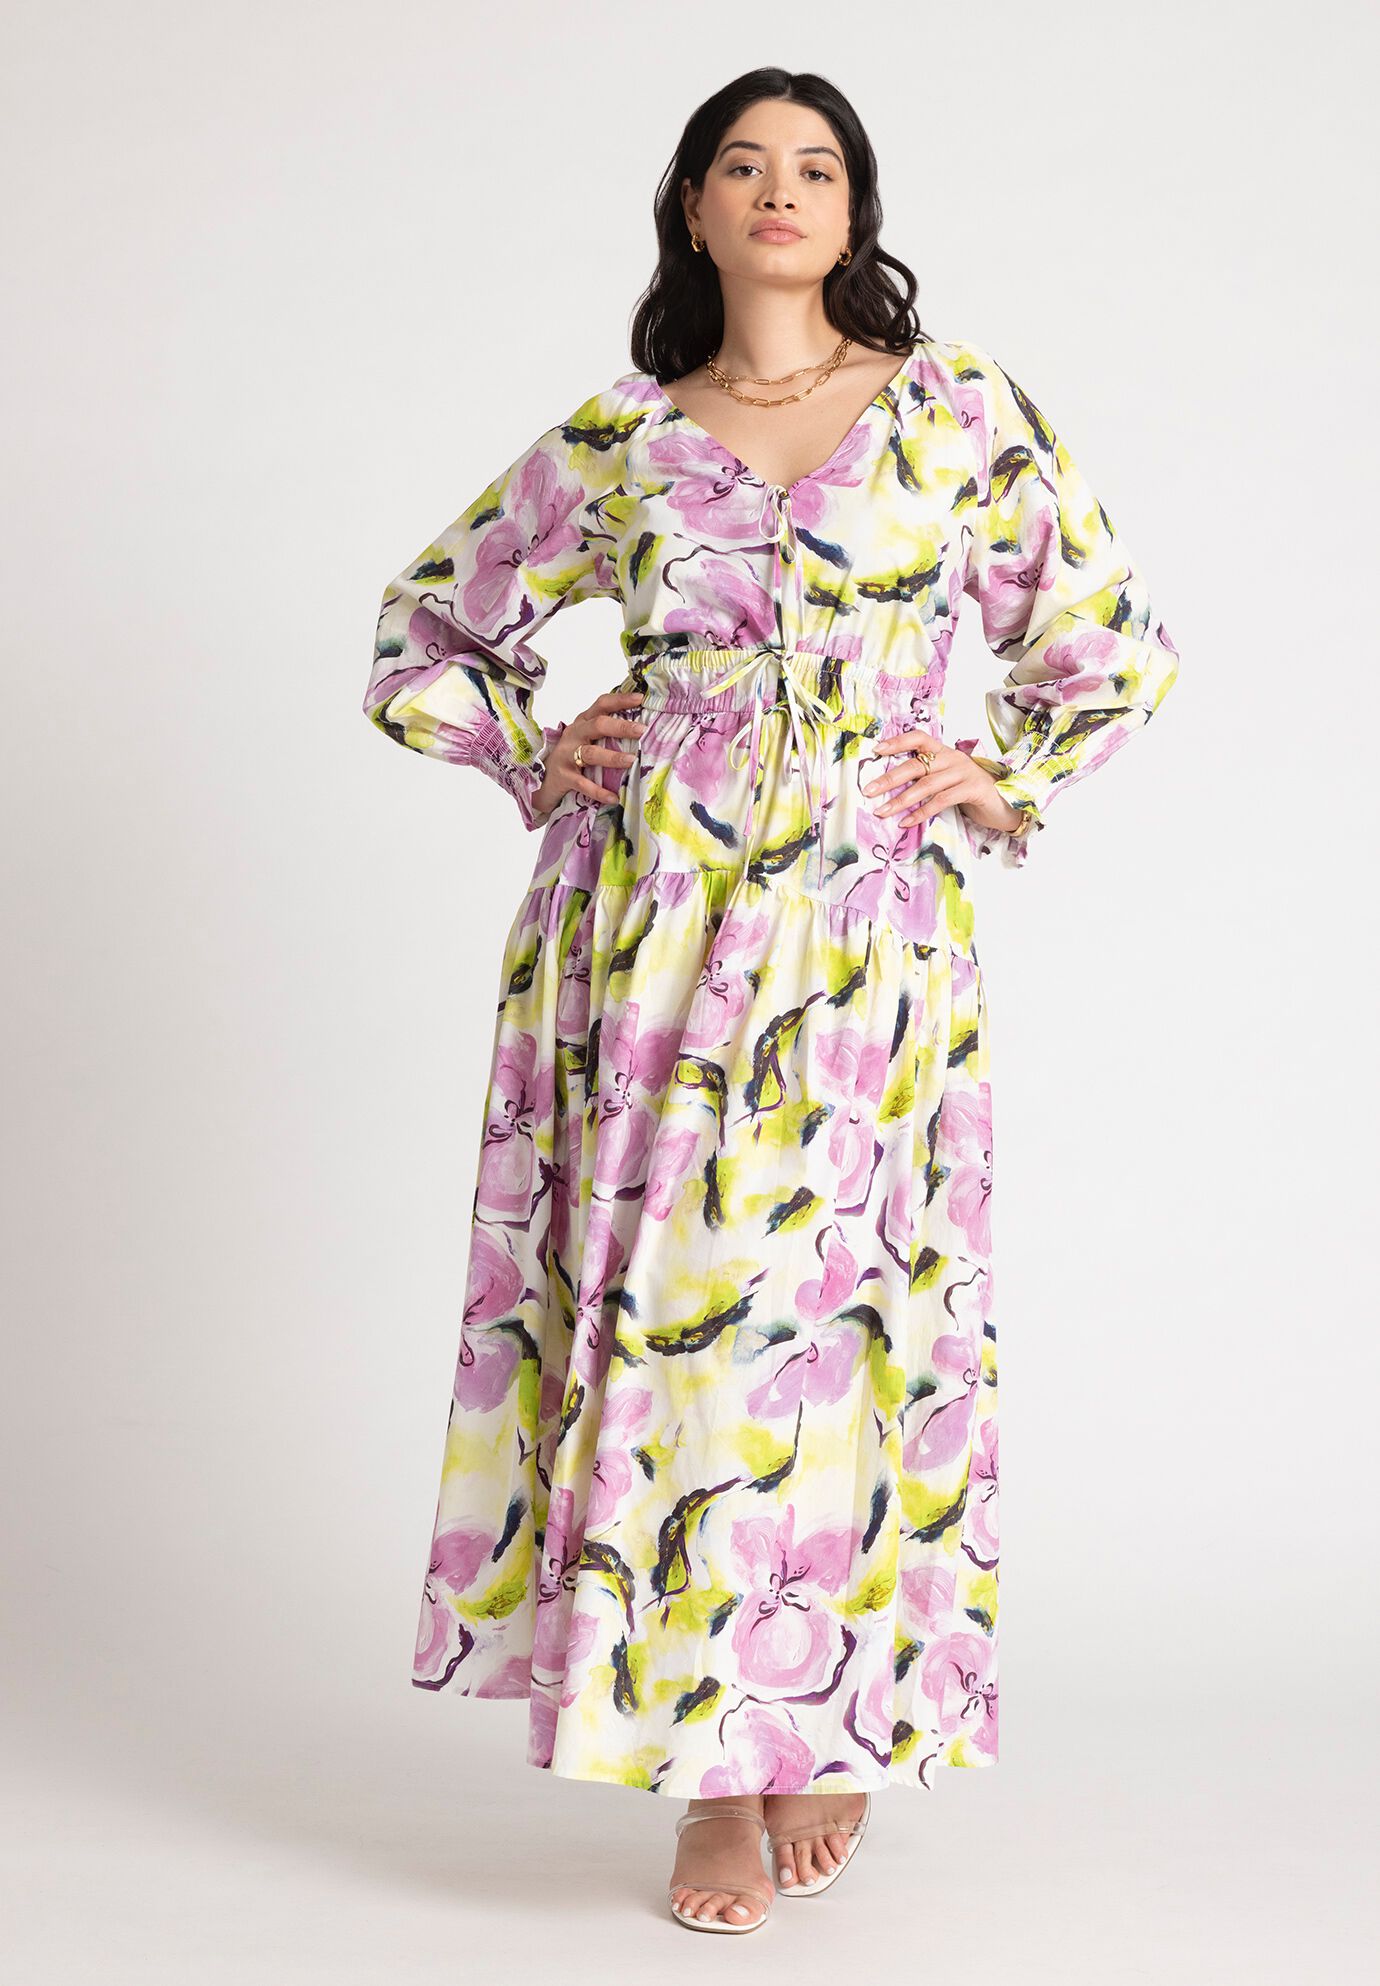 V-neck Raglan Sleeves Floral Print Dress by Eloquii